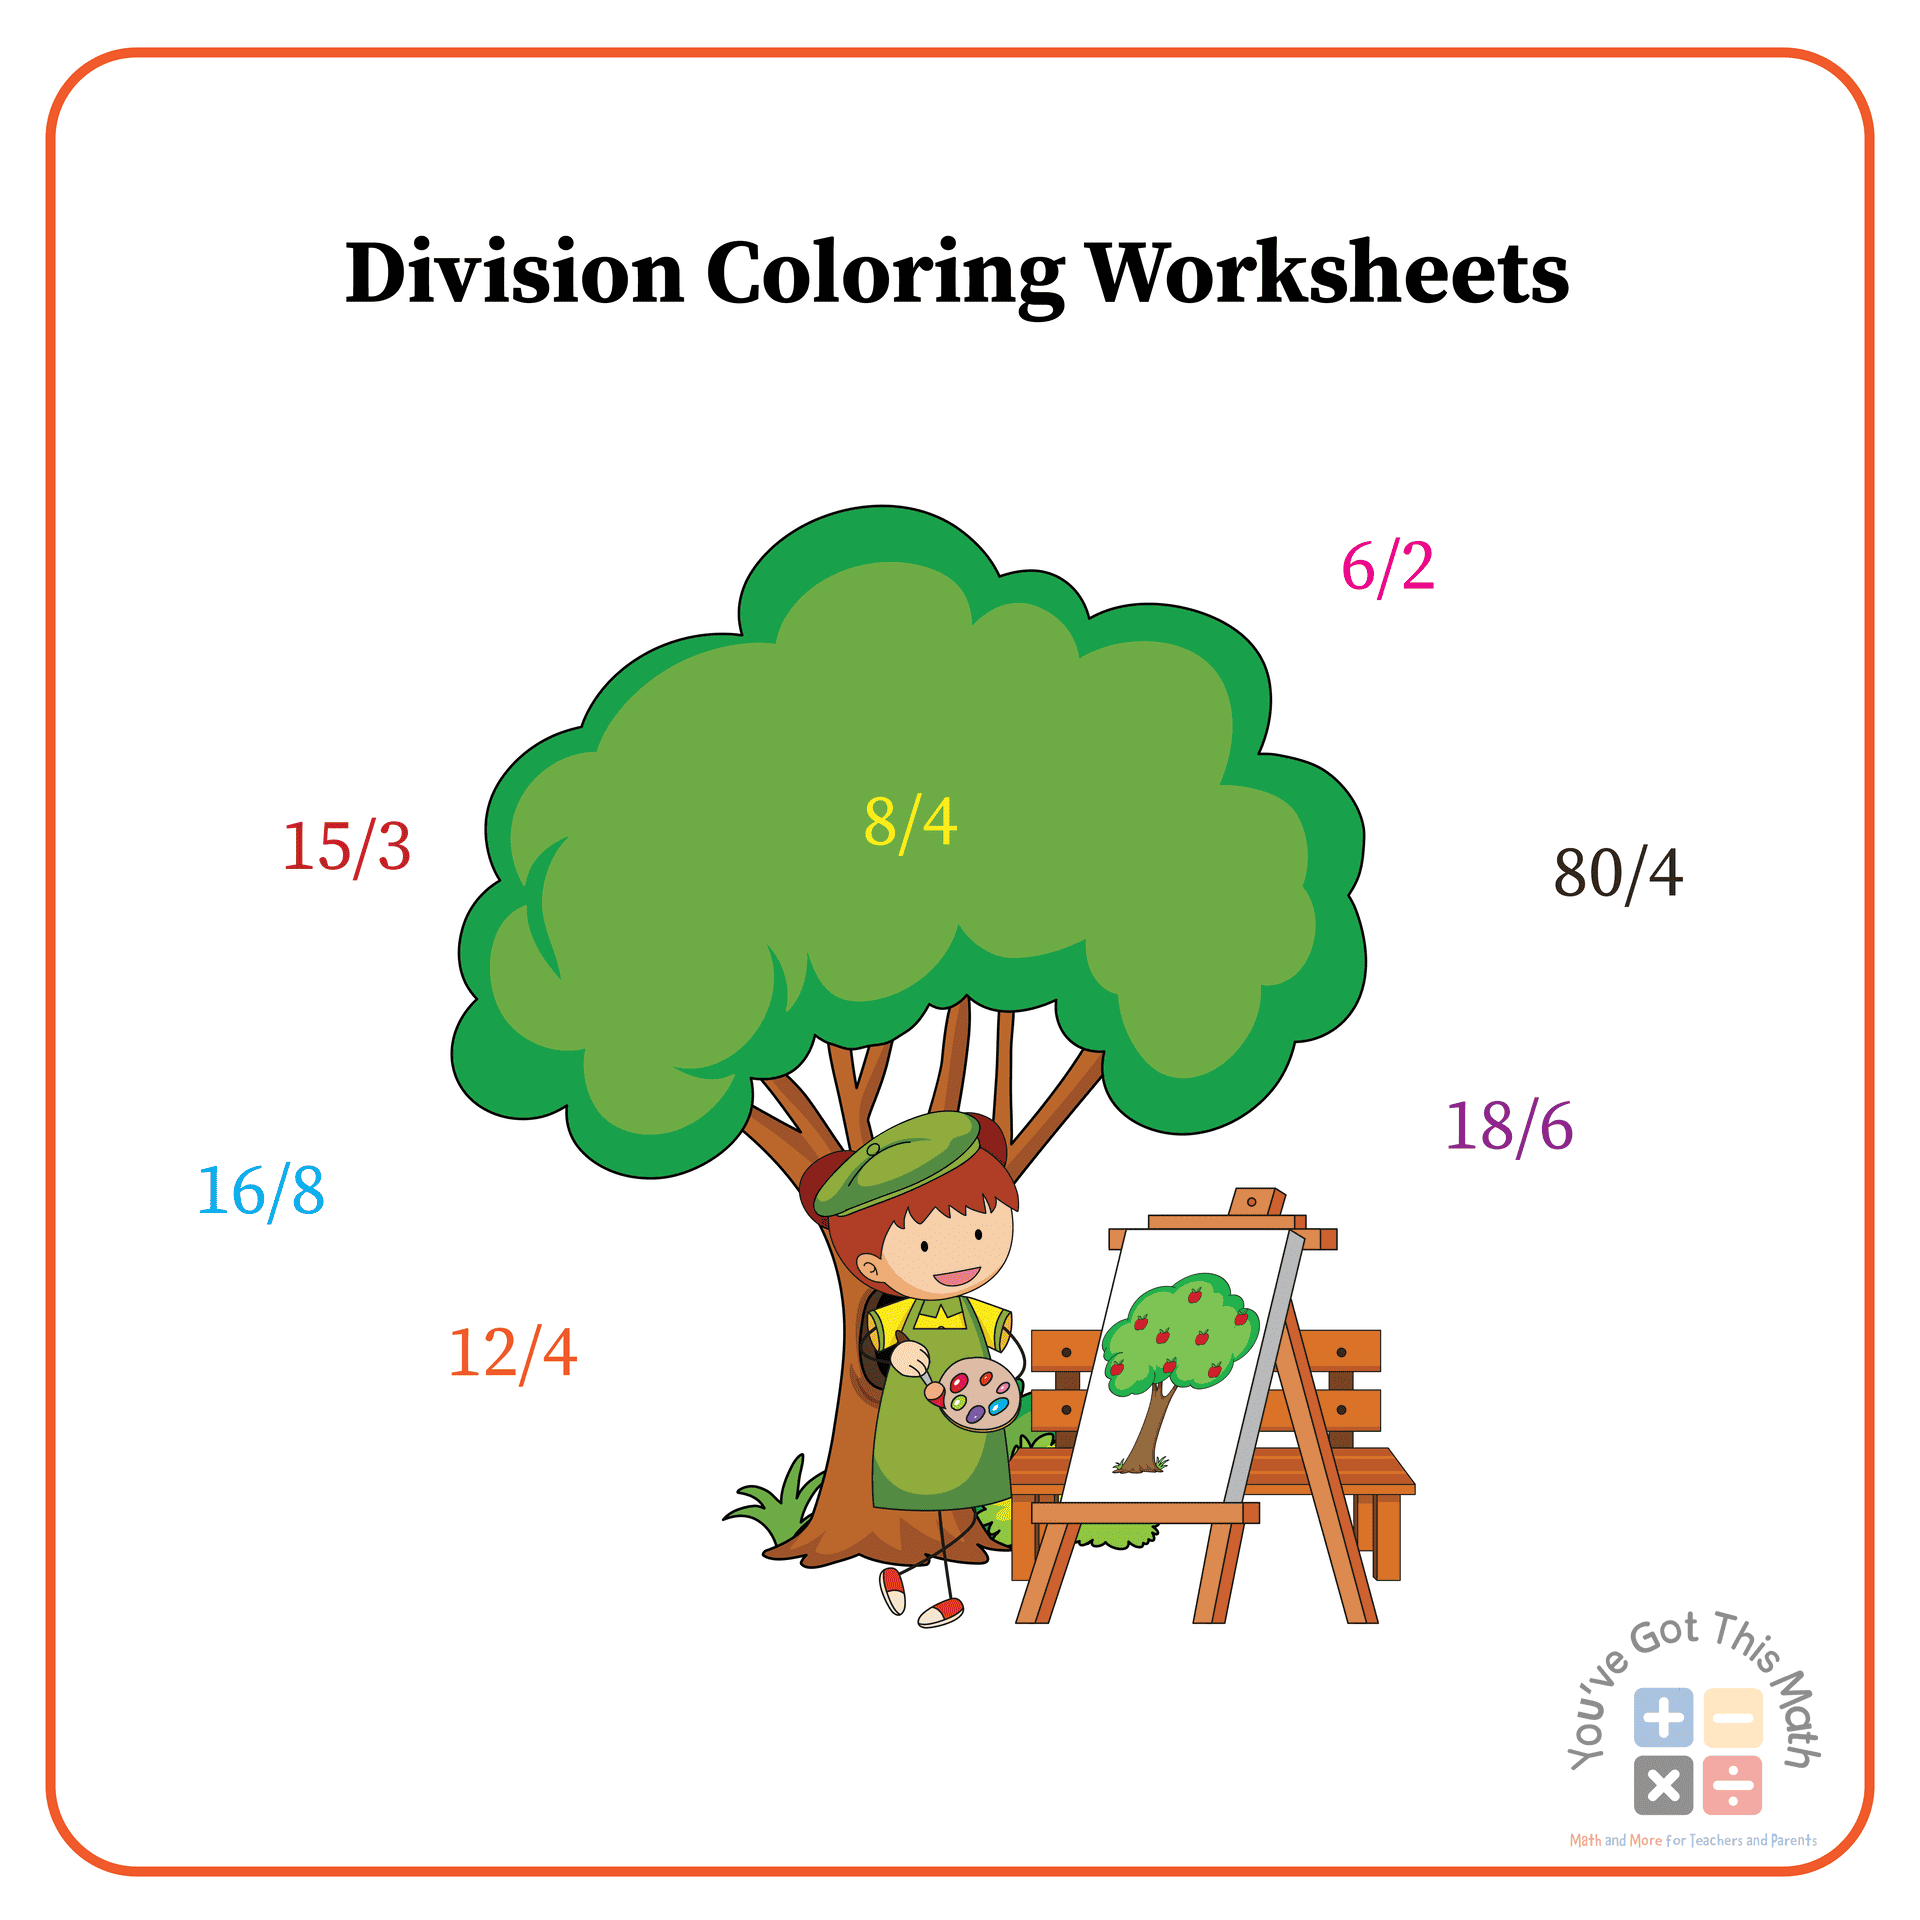 Division coloring worksheets